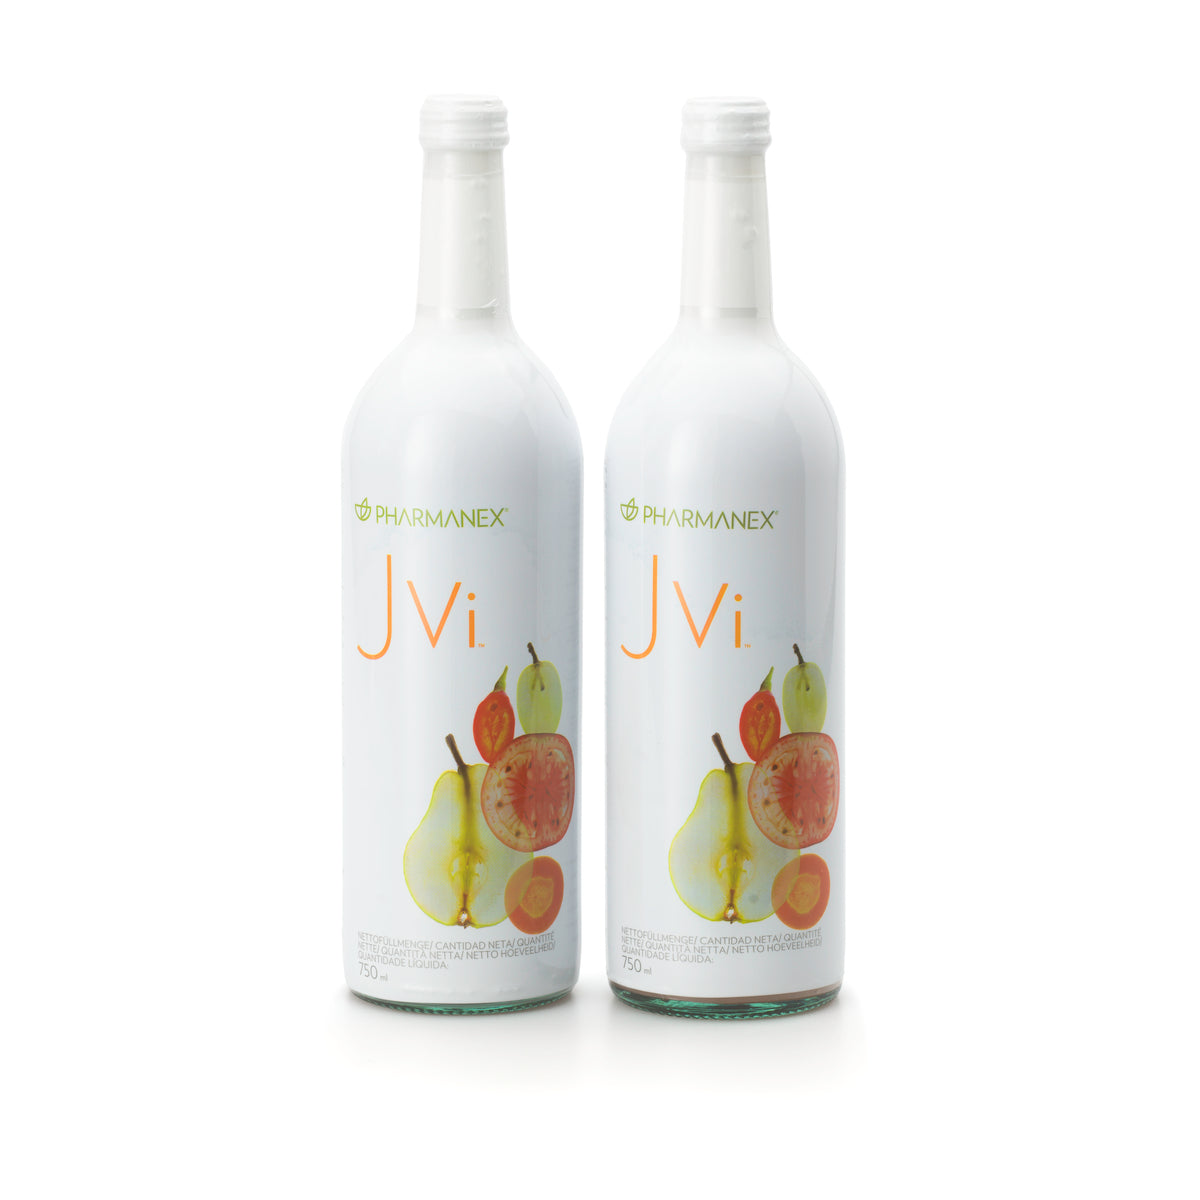 JVi - Vitaminedrank van Nu Skin